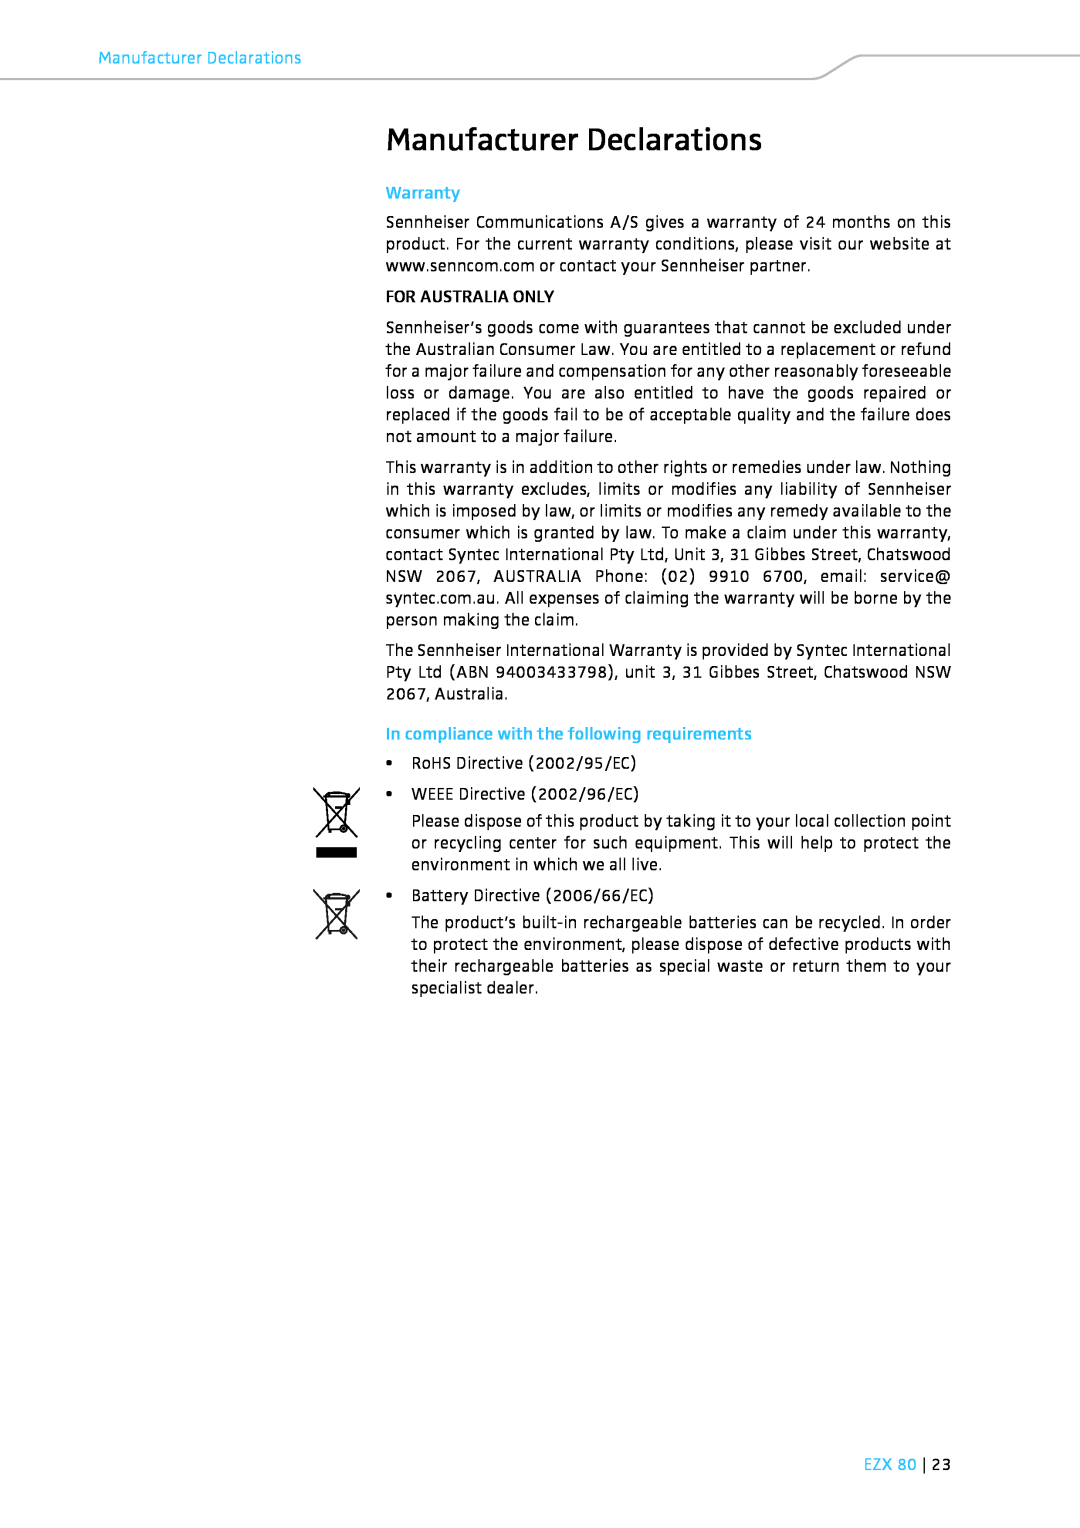 Sennheiser EZX 80 Manufacturer Declarations, Warranty, In compliance with the following requirements, Ezx 